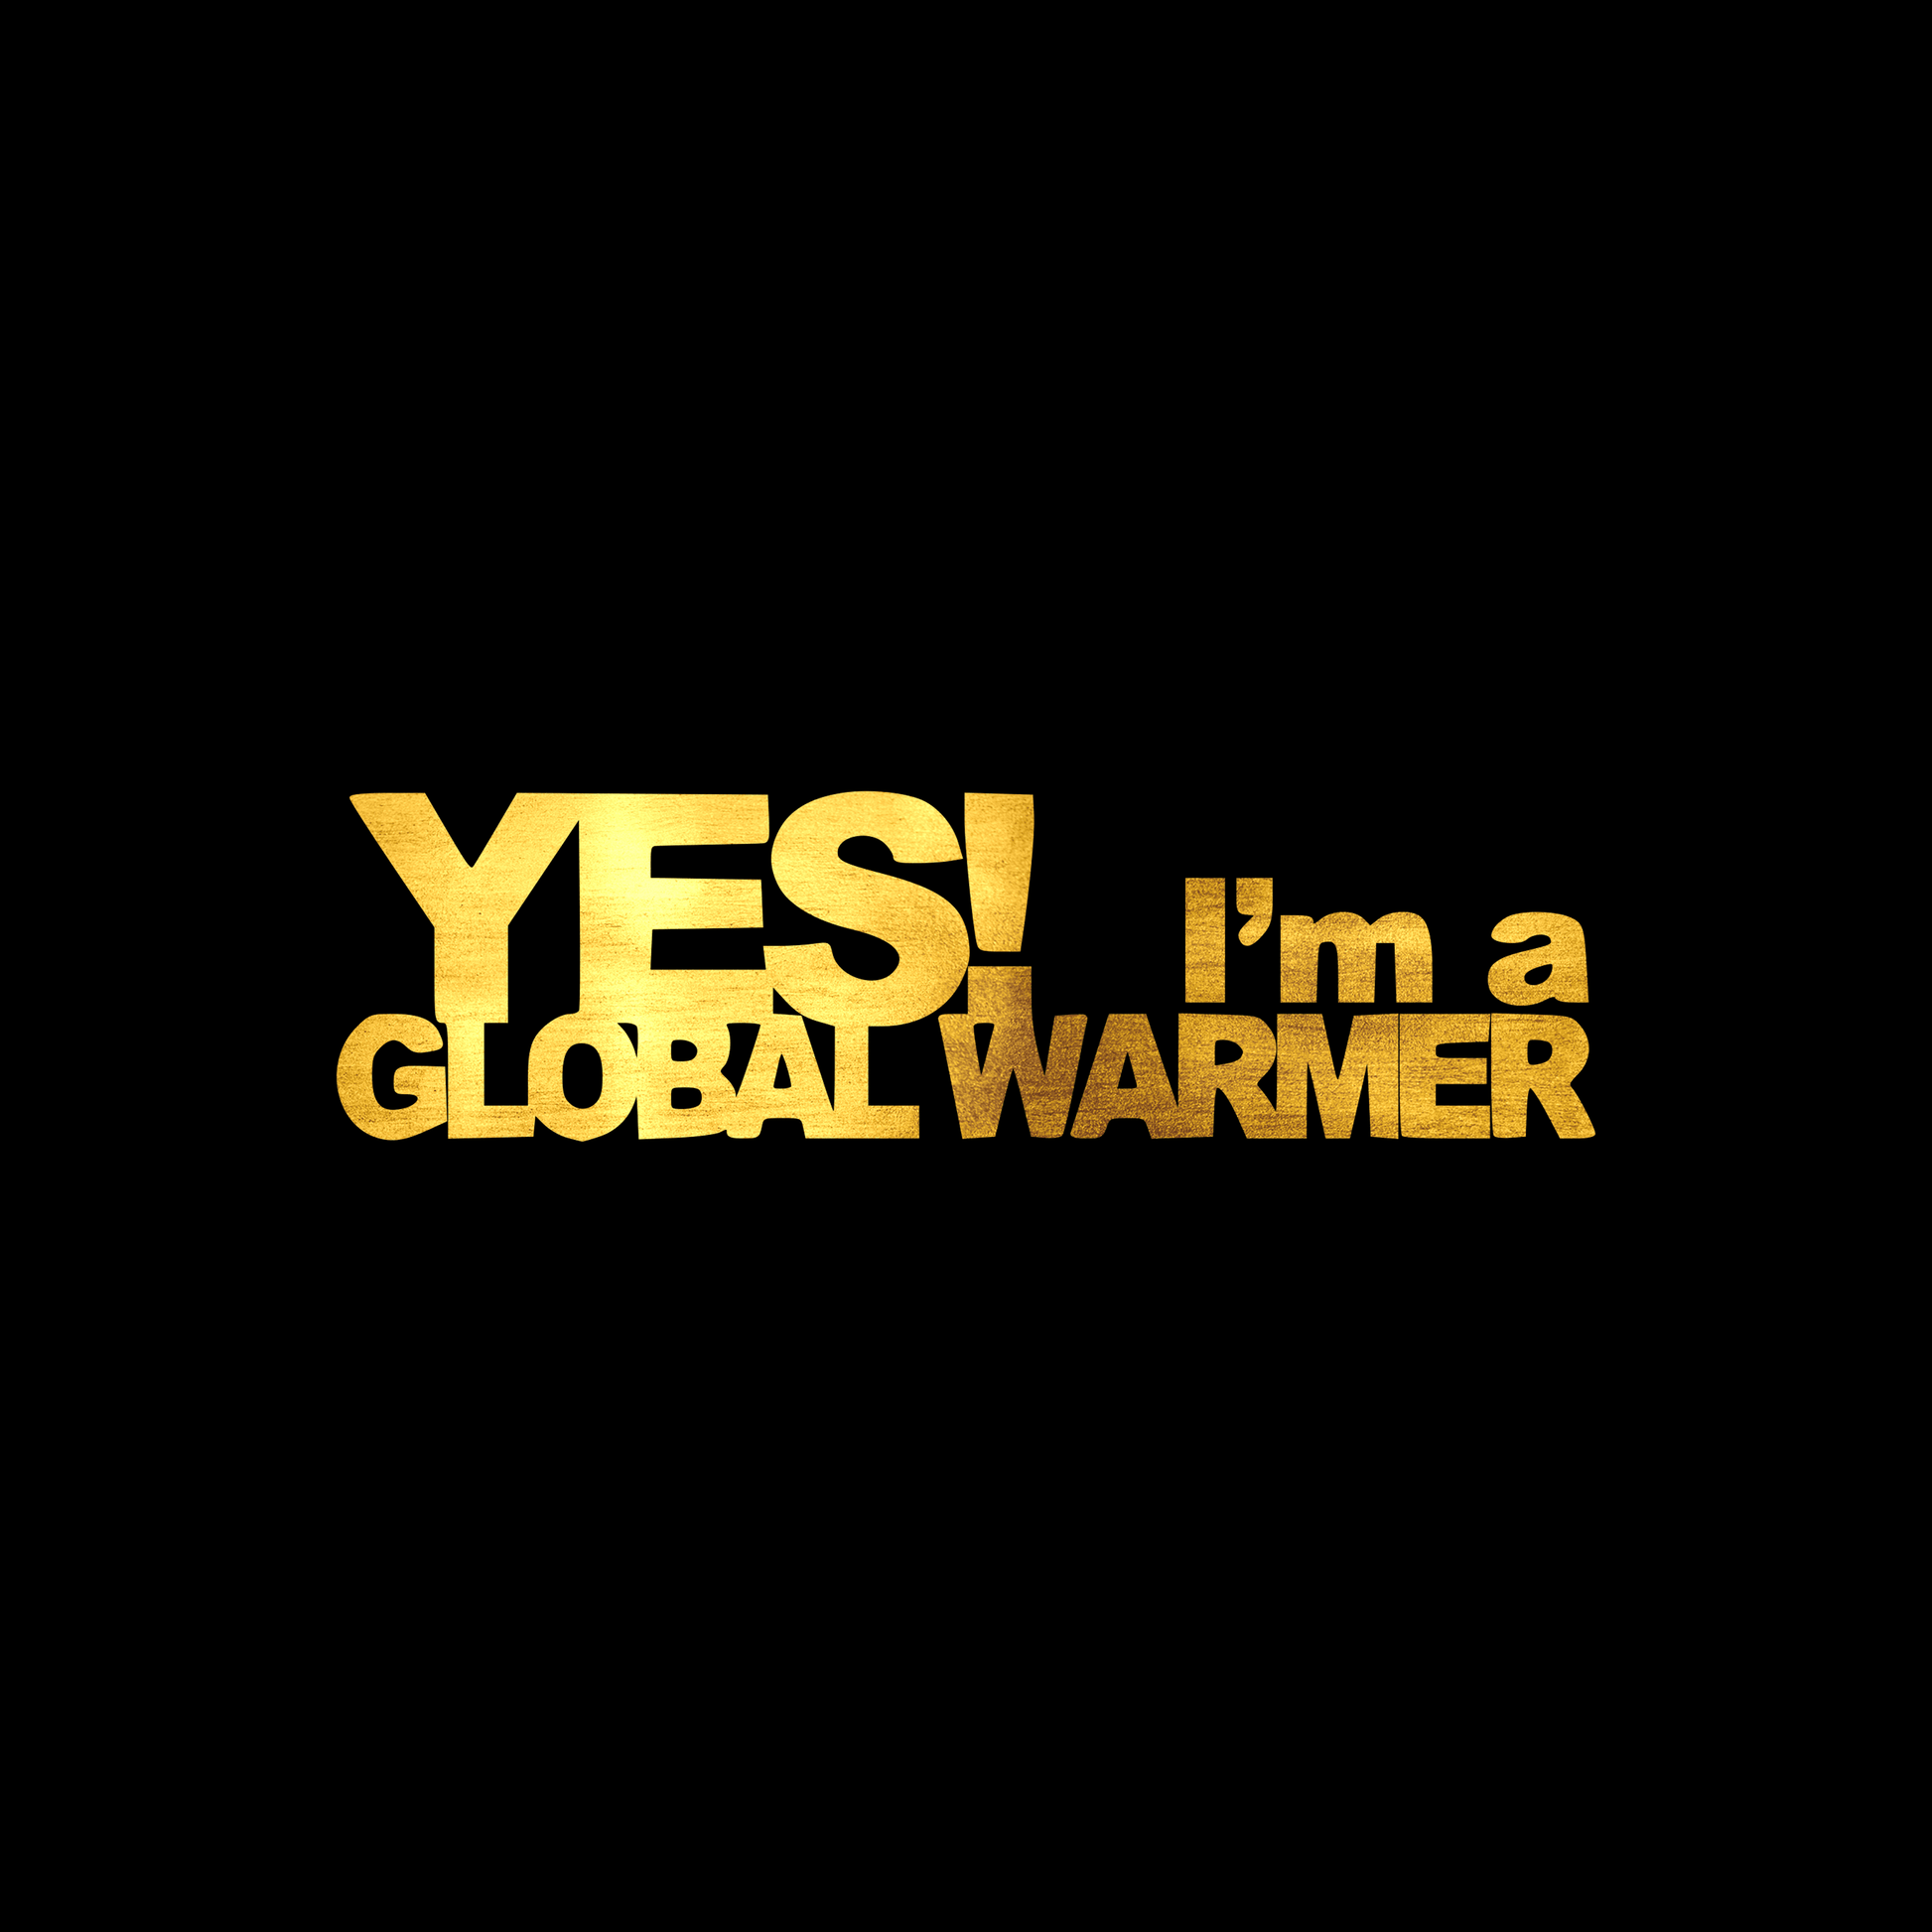 Yes I'm a global warmer sticker decal